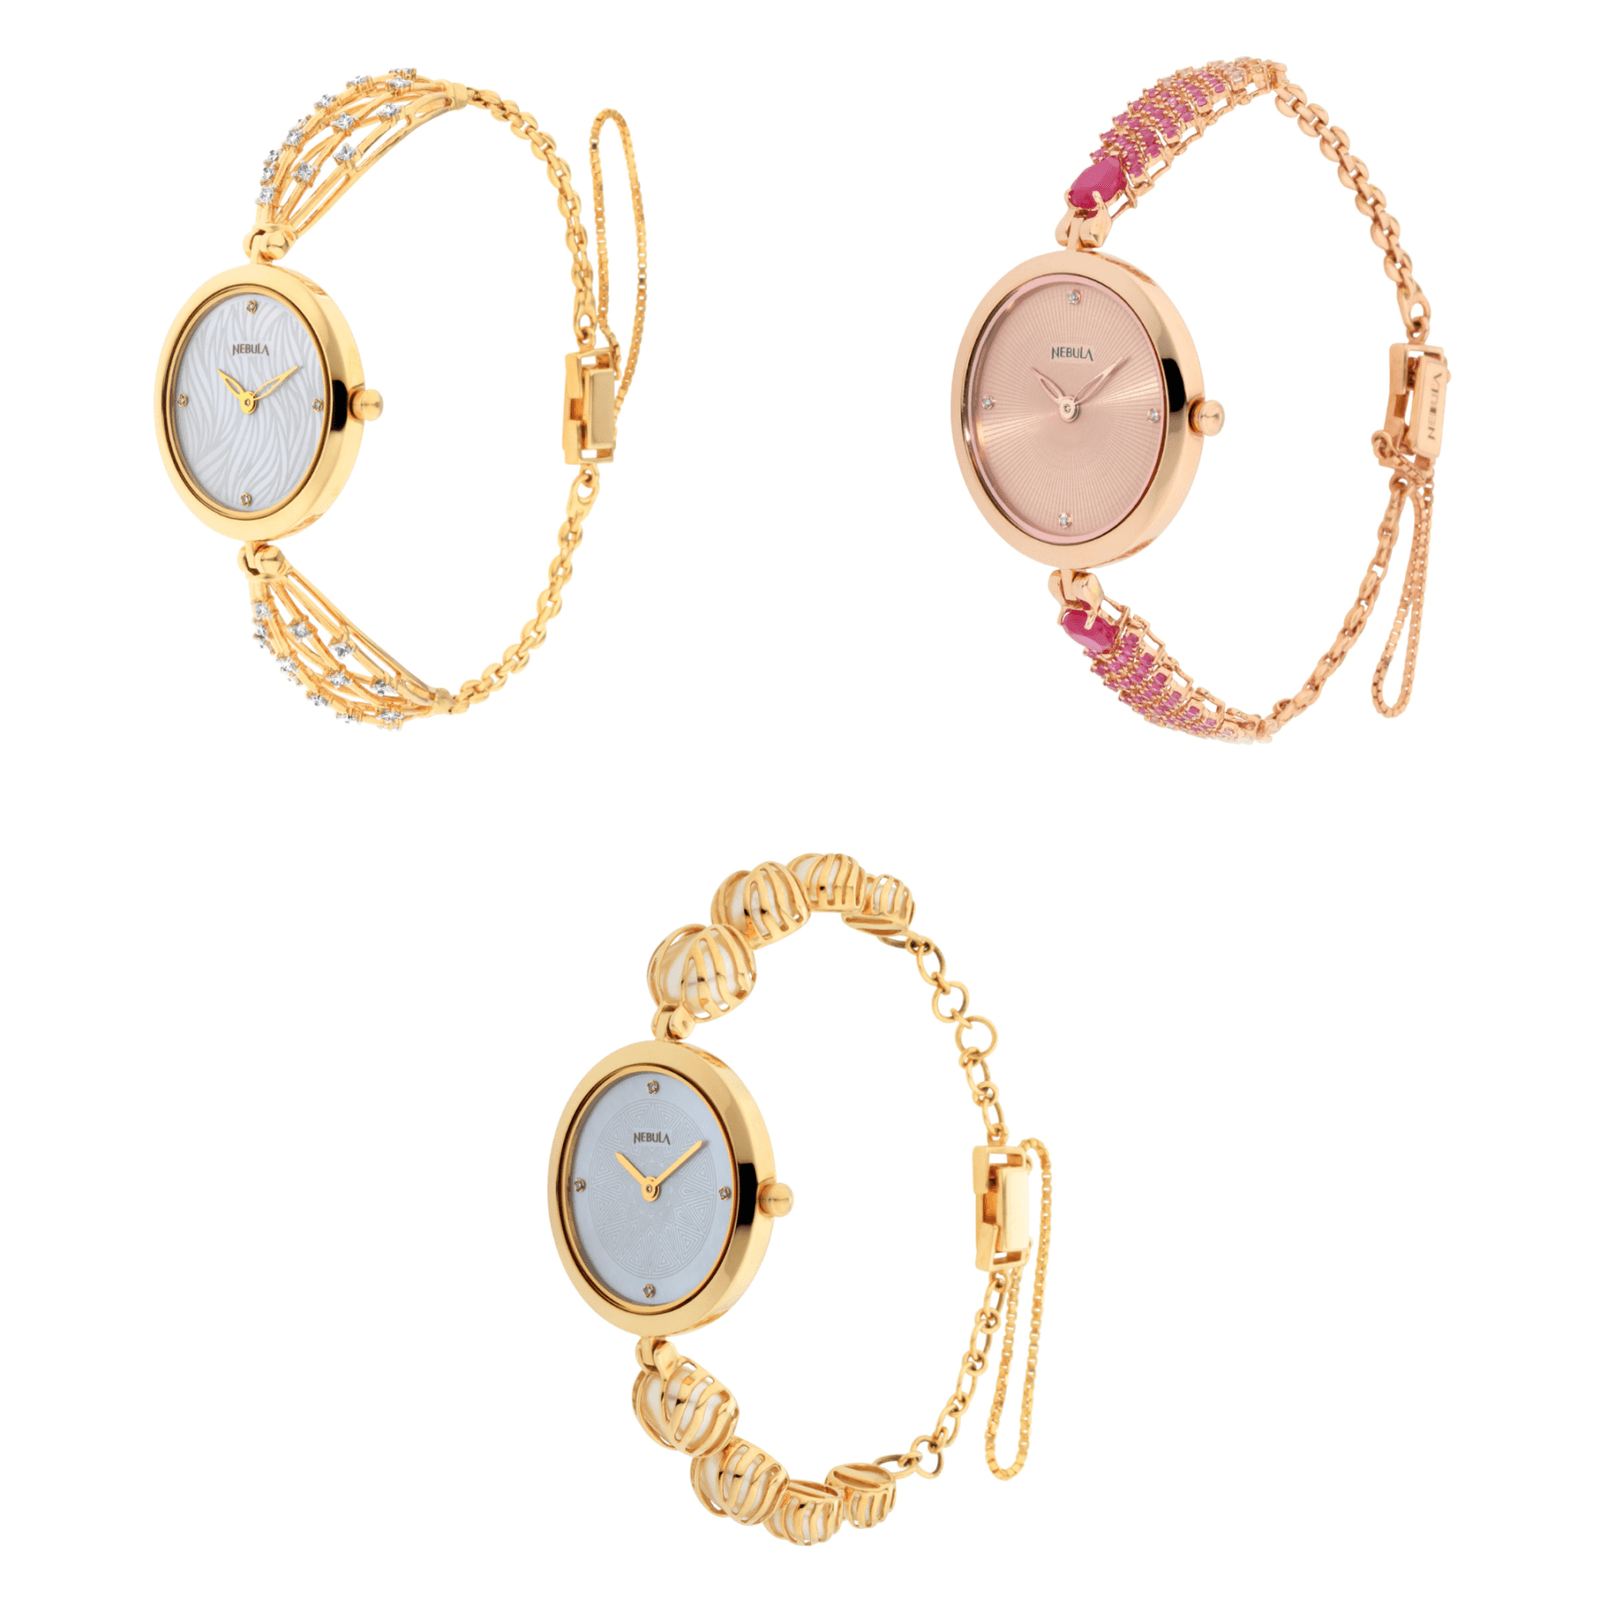 The trio of timepieces in Nebula’s Ashvi collection